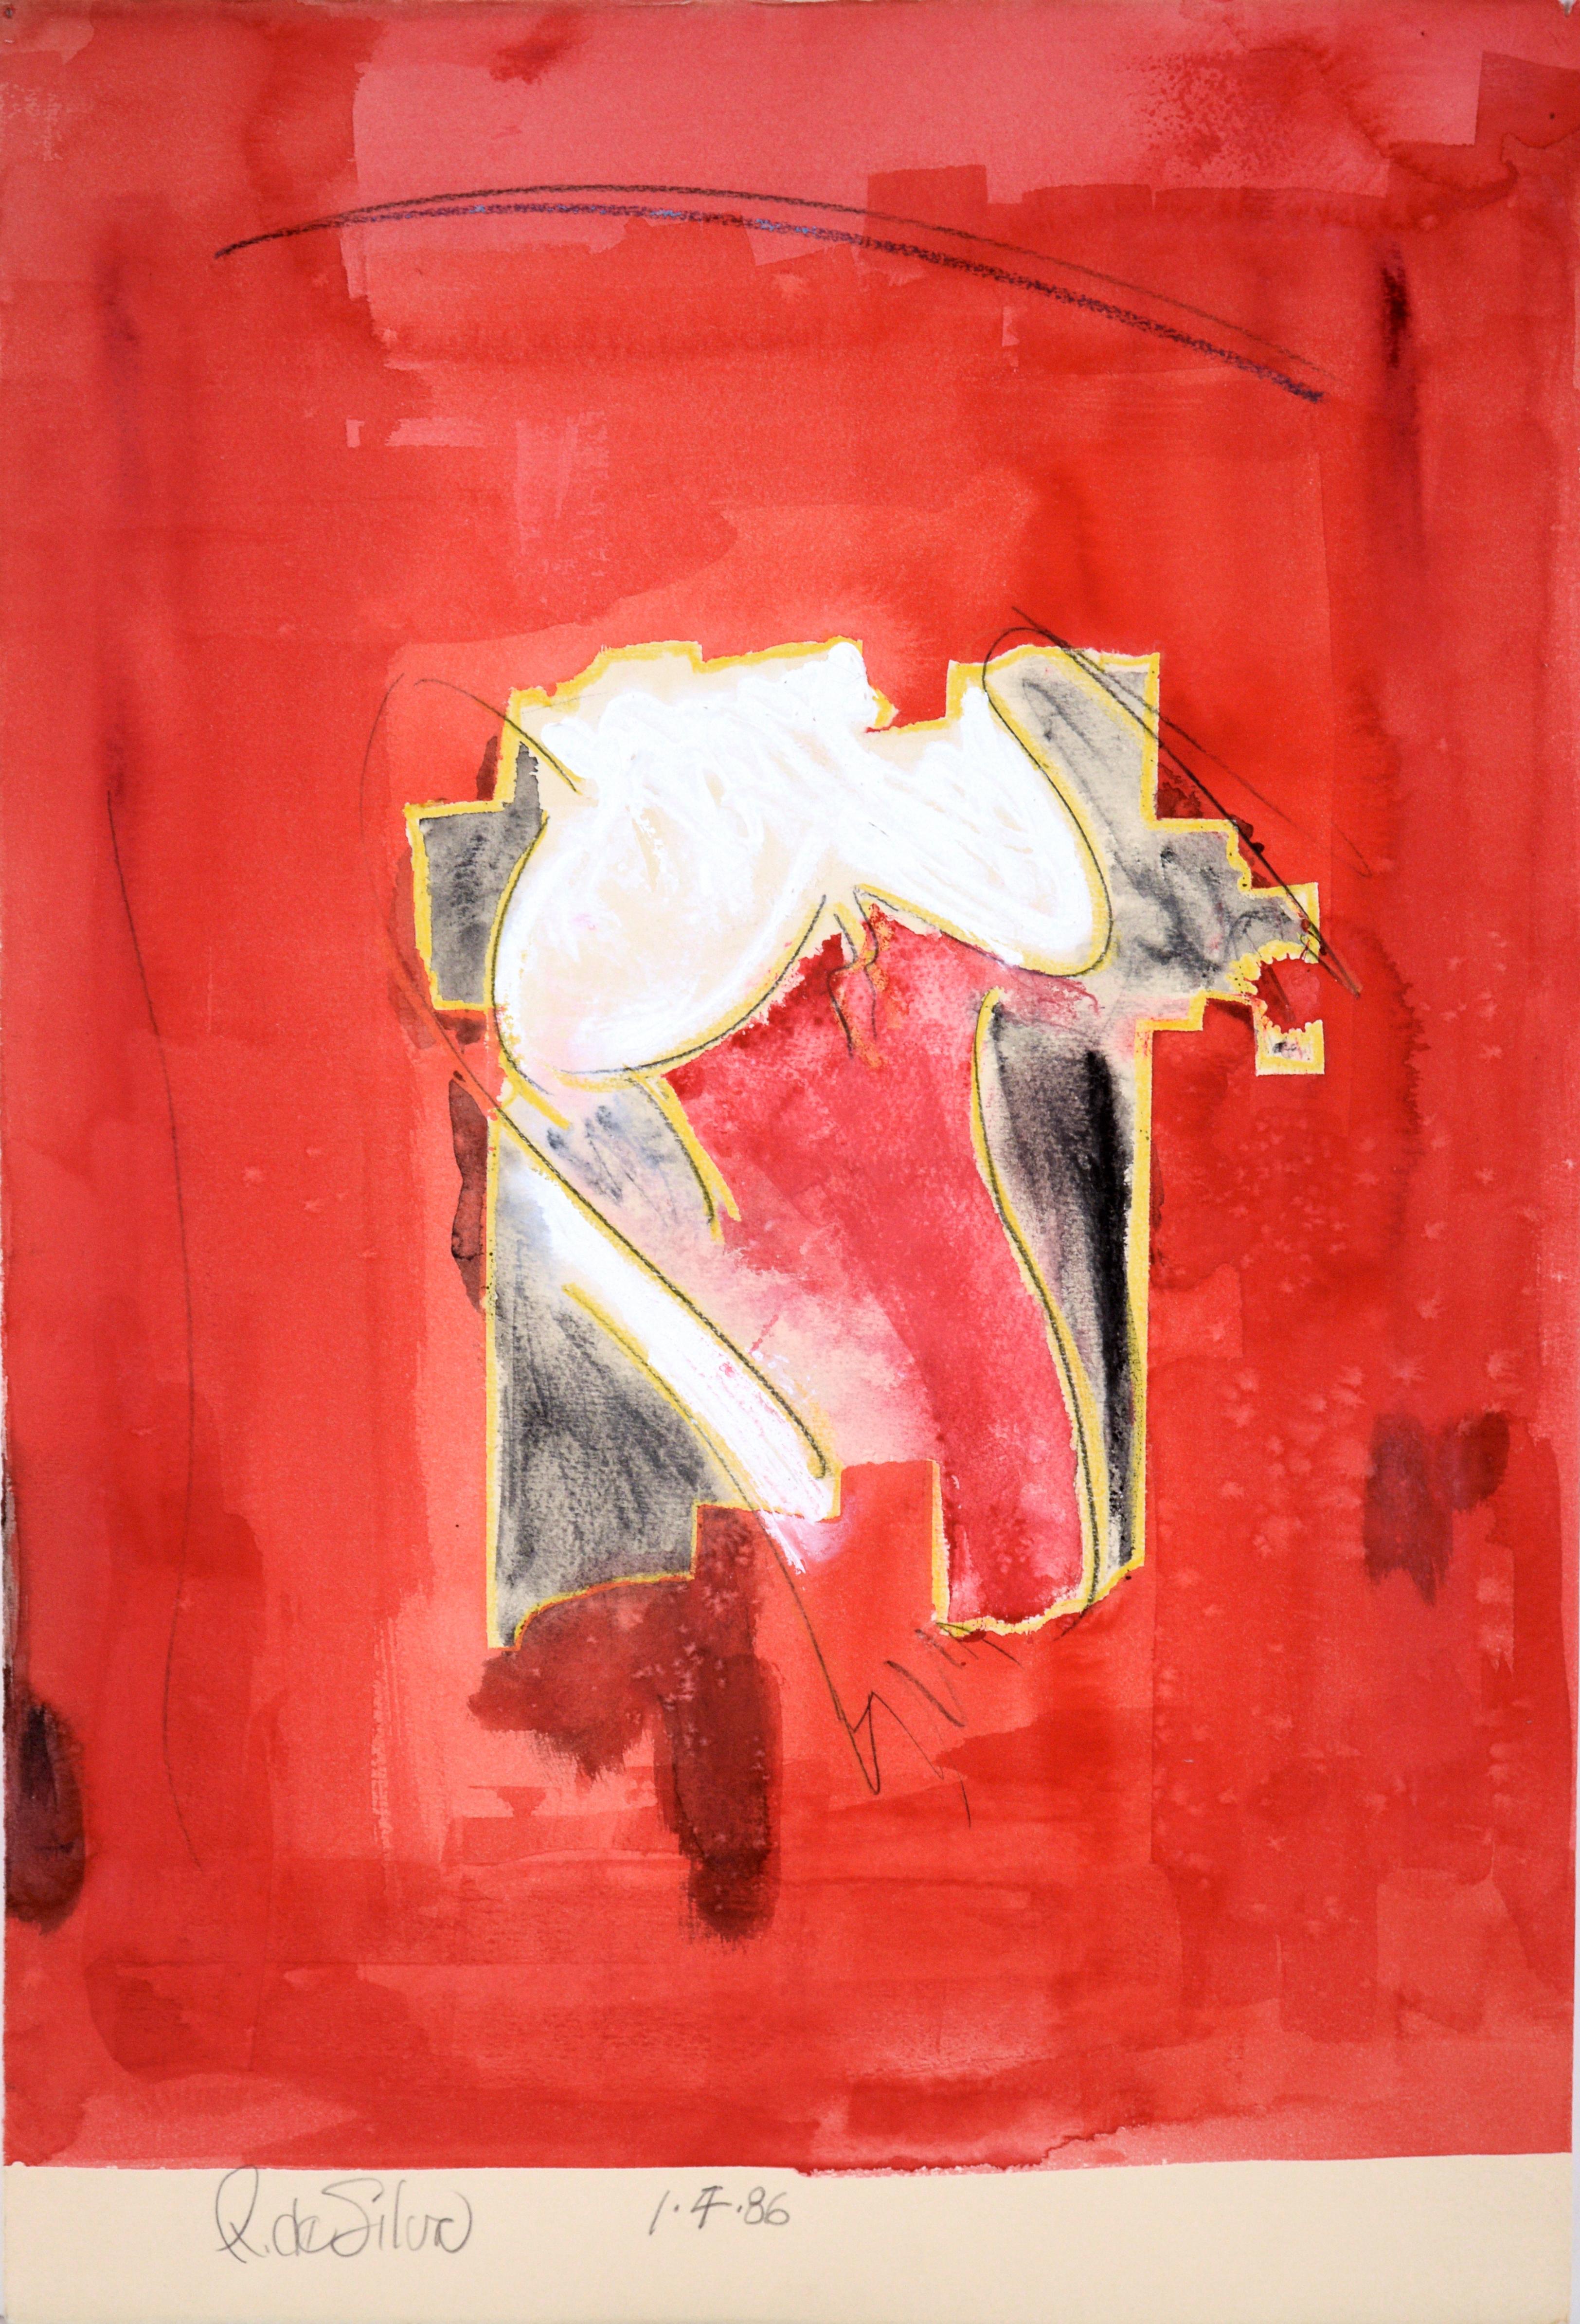 Ricardo de Silva Abstract Painting – Roter Mieder abstrakter Akt 